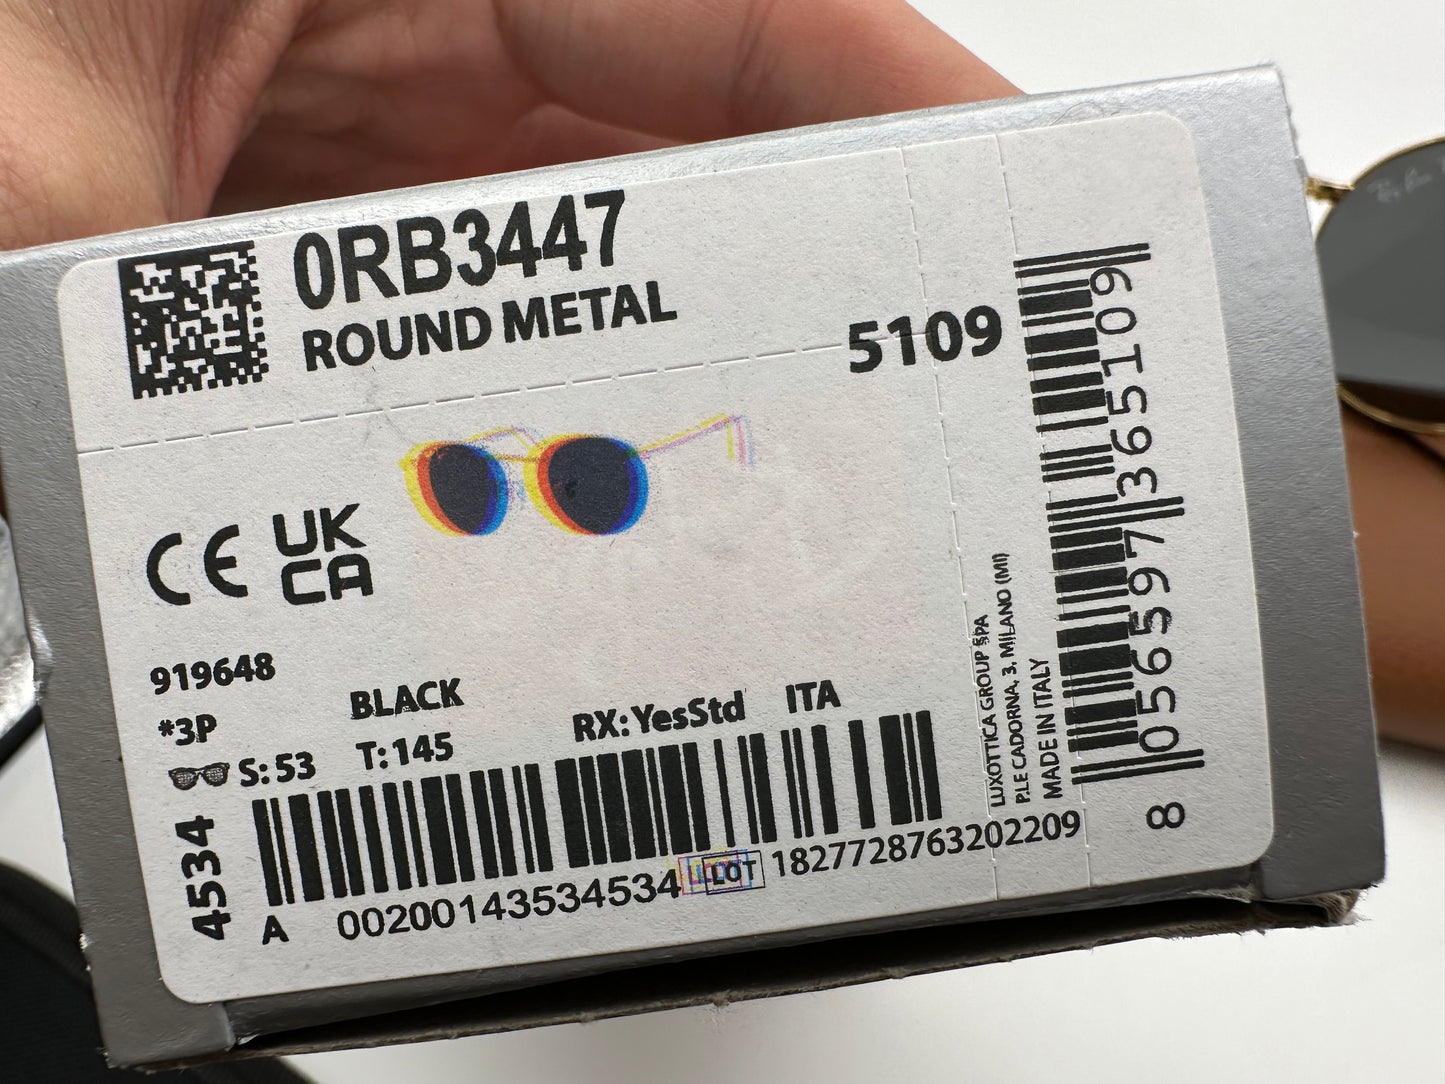 Ray Ban Round Metal Classic Polarized Black Unisex Sunglasses RB3447 919648 50